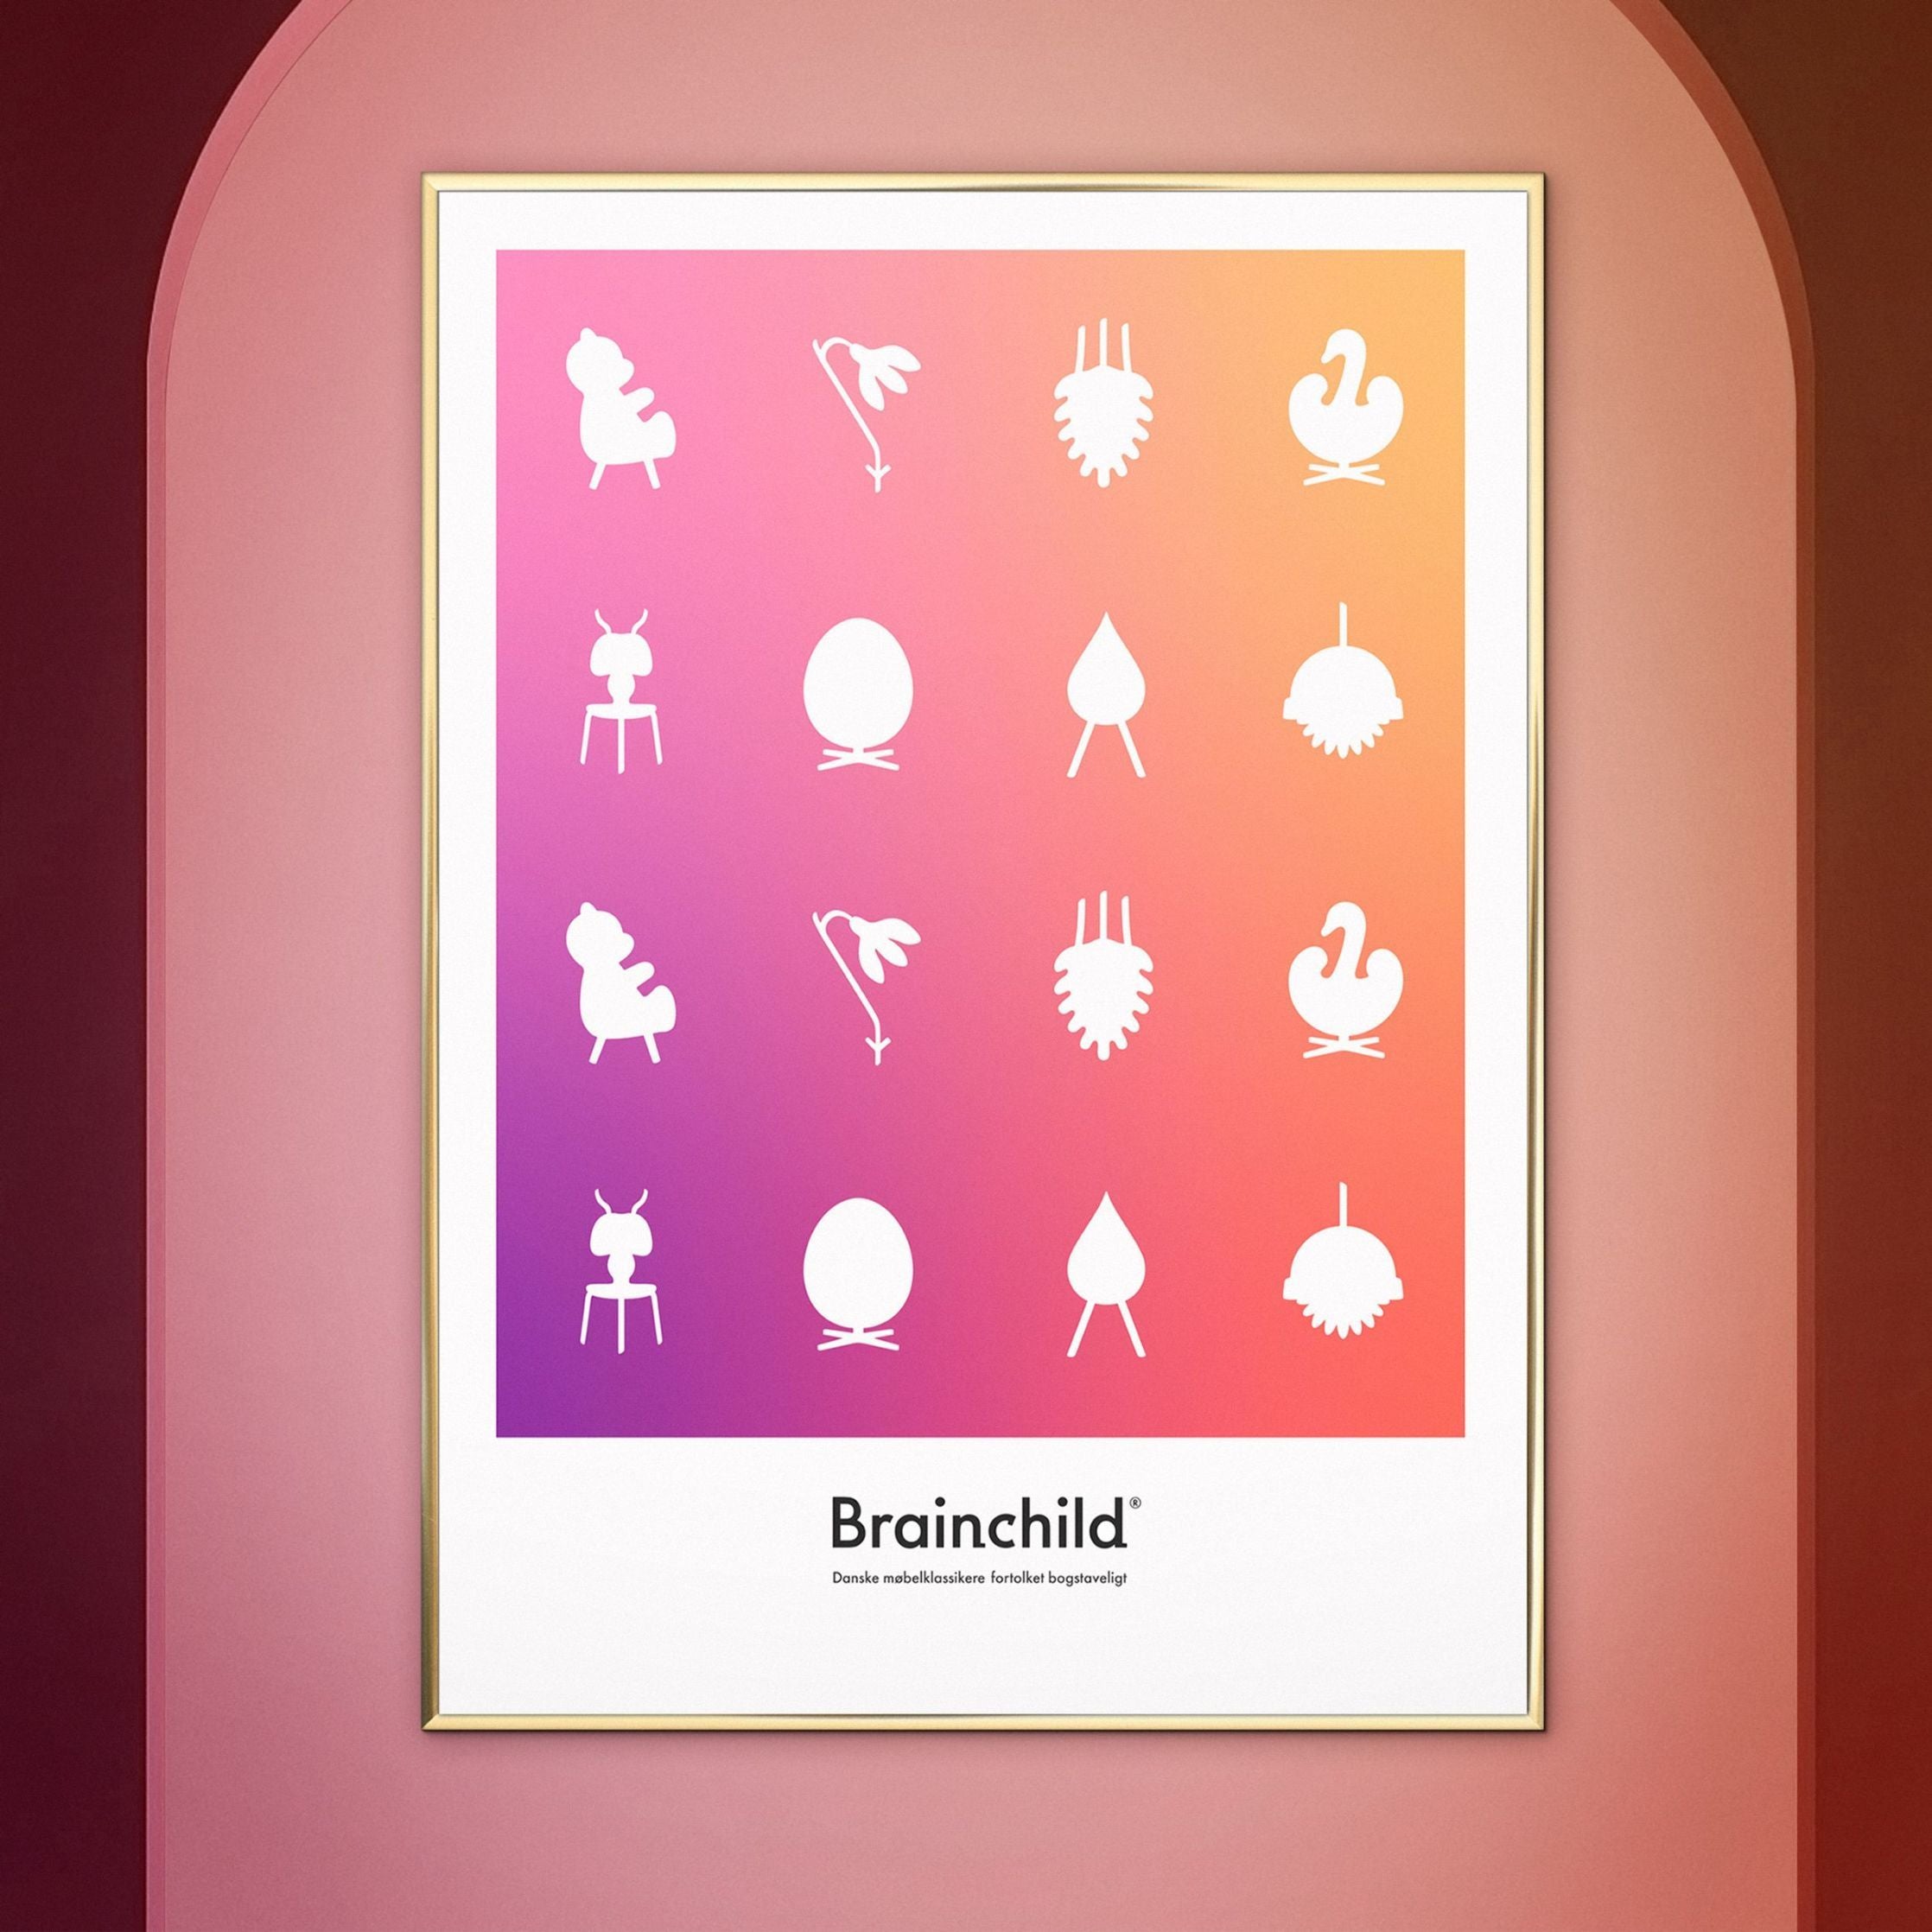 Brainchild Design Icon Poster, Frame Made Of Dark Wood 30x40 Cm, Colour